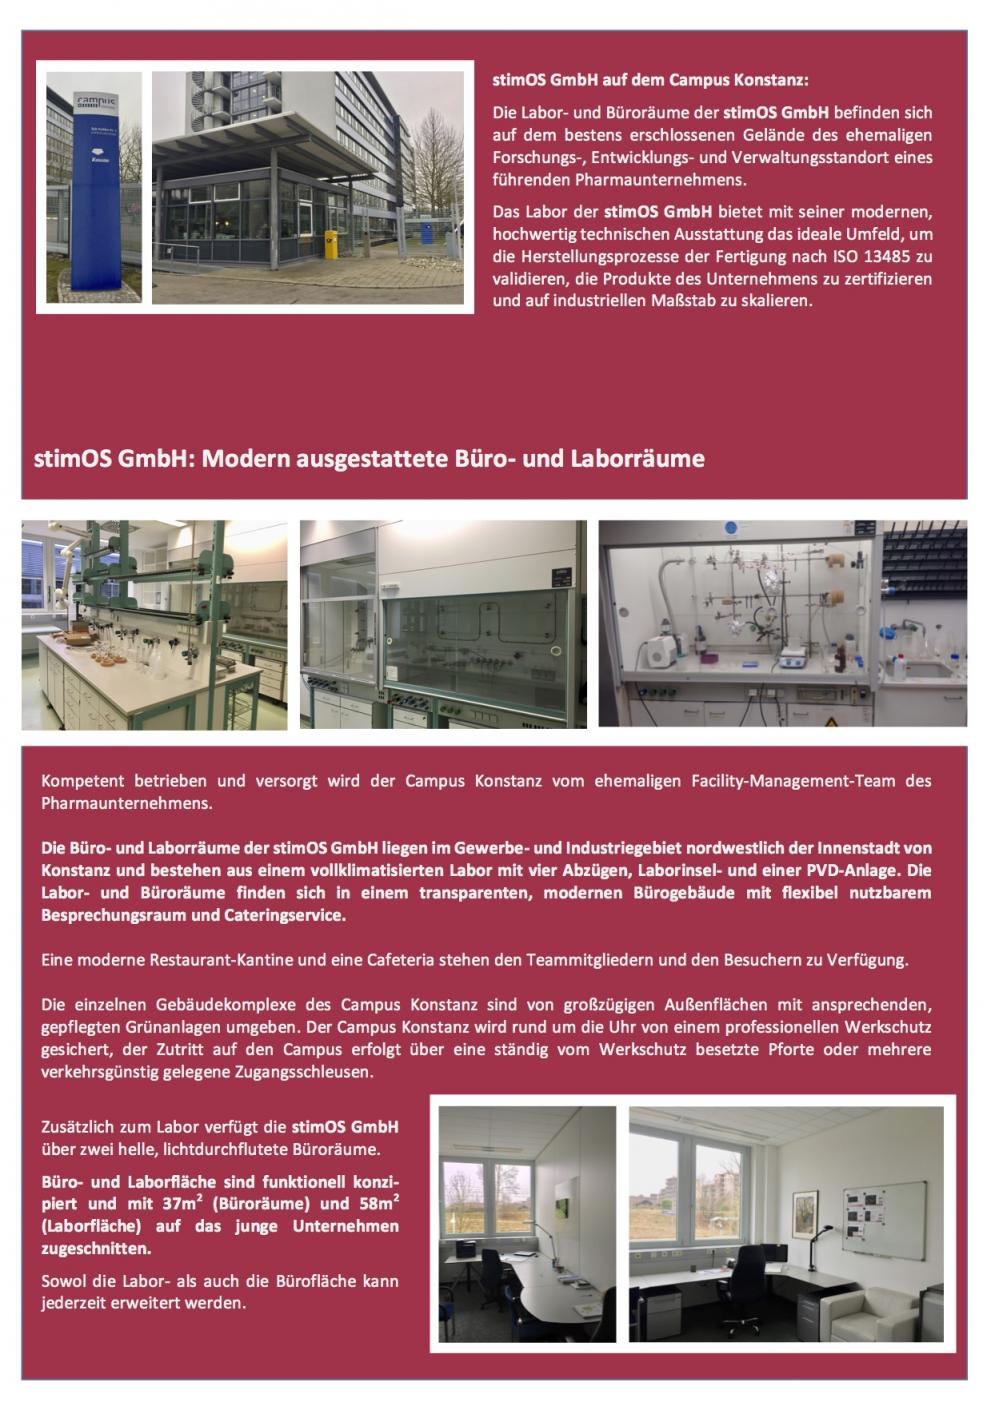 MedDEV News Medical Device Monthly News stimOS GmbH Labor